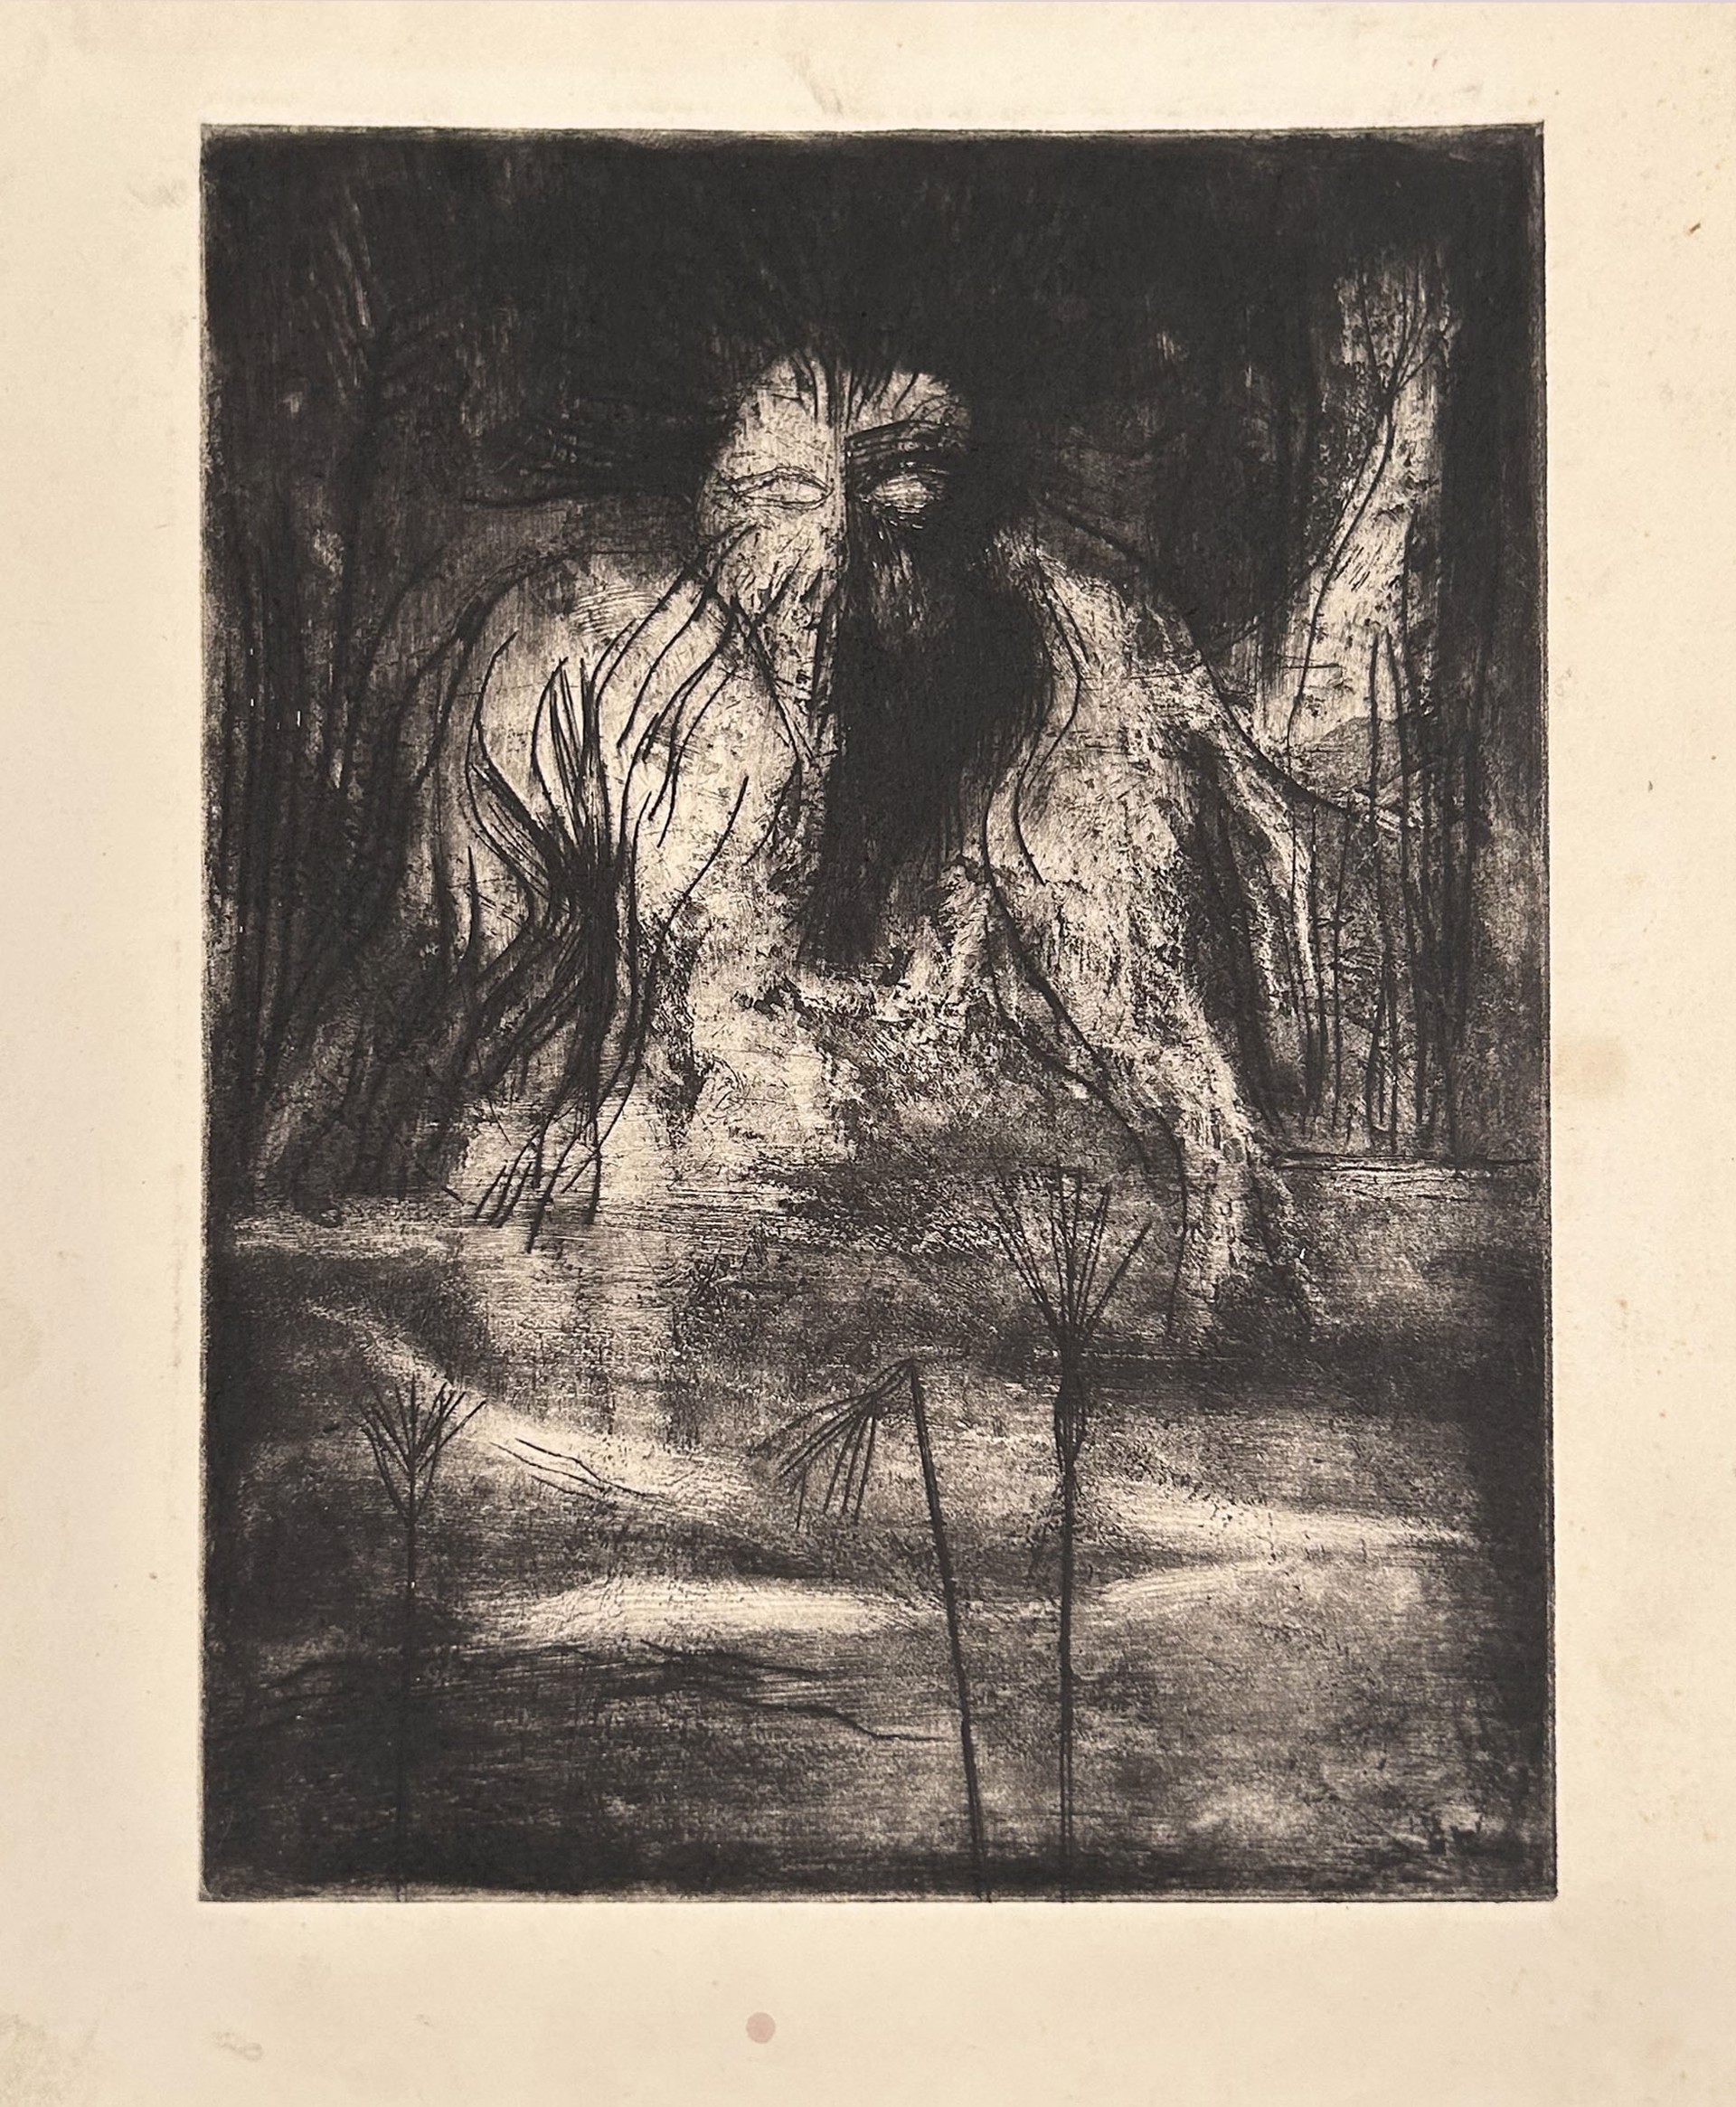 17b. Untitled (River Spirit- State II?) by Bill Reily Prints